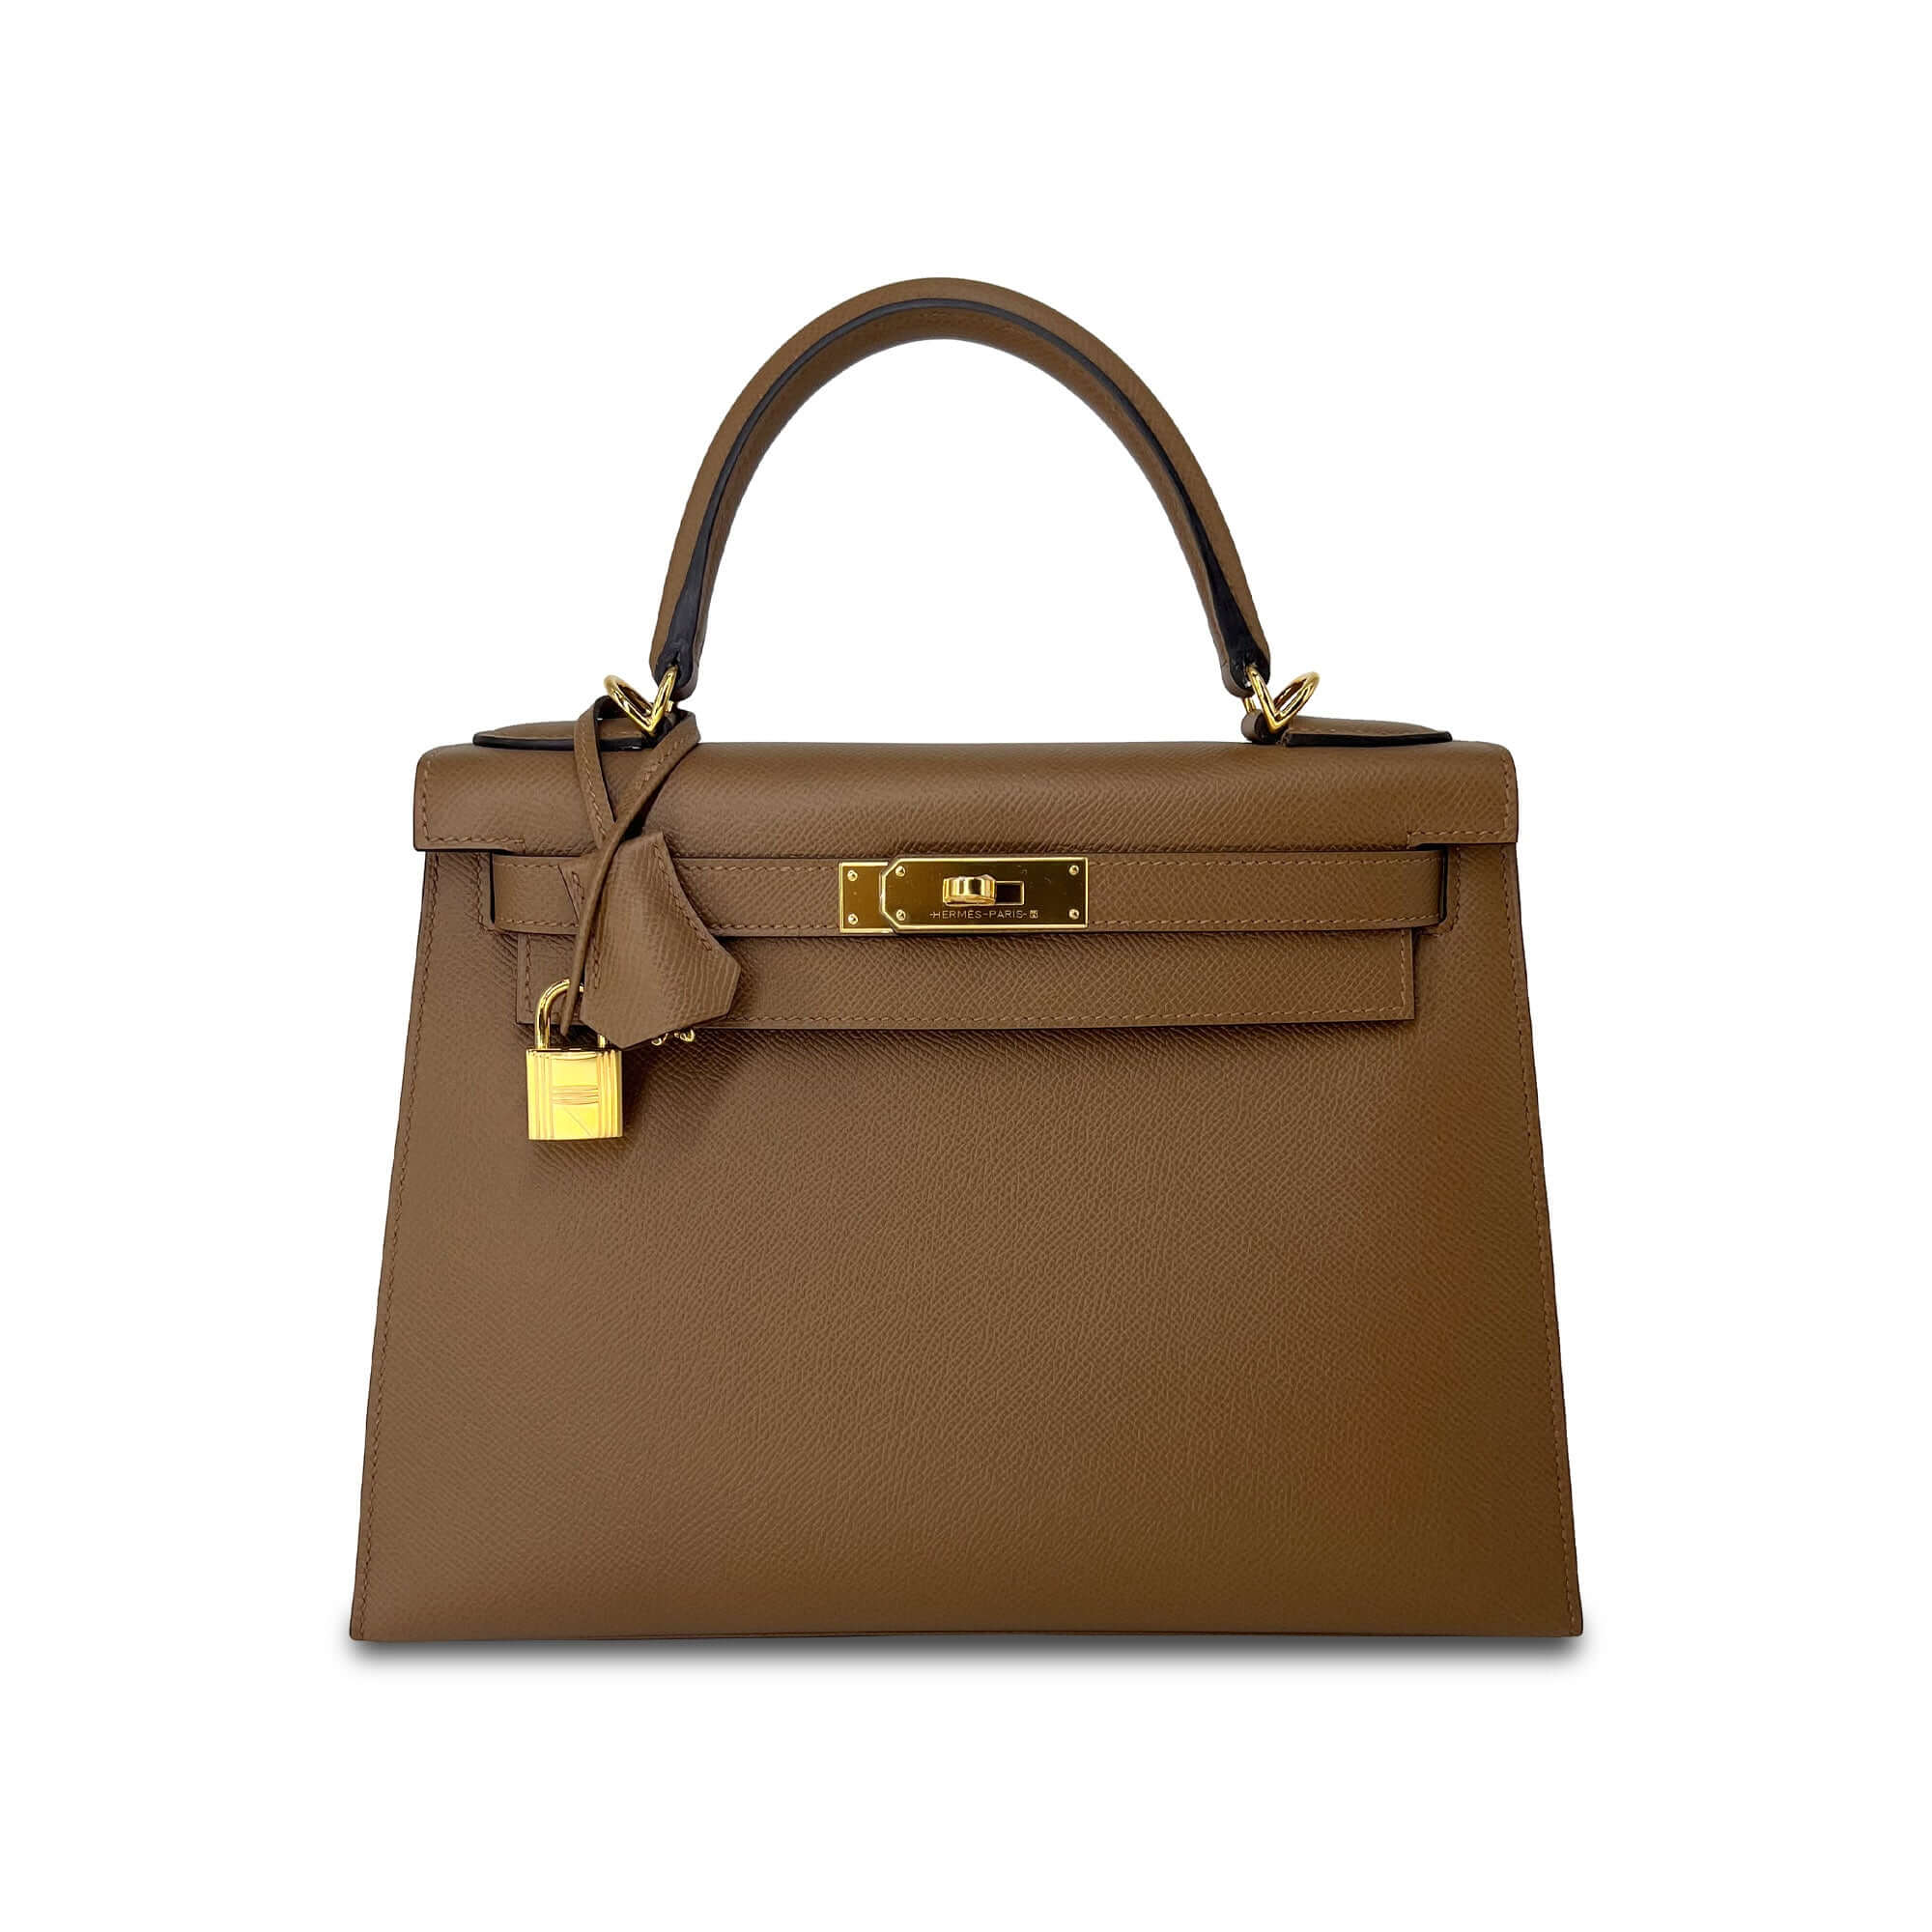 Authenticated Used Hermes Birkin 30 3EN1 handbag Togo/Swift/Toile